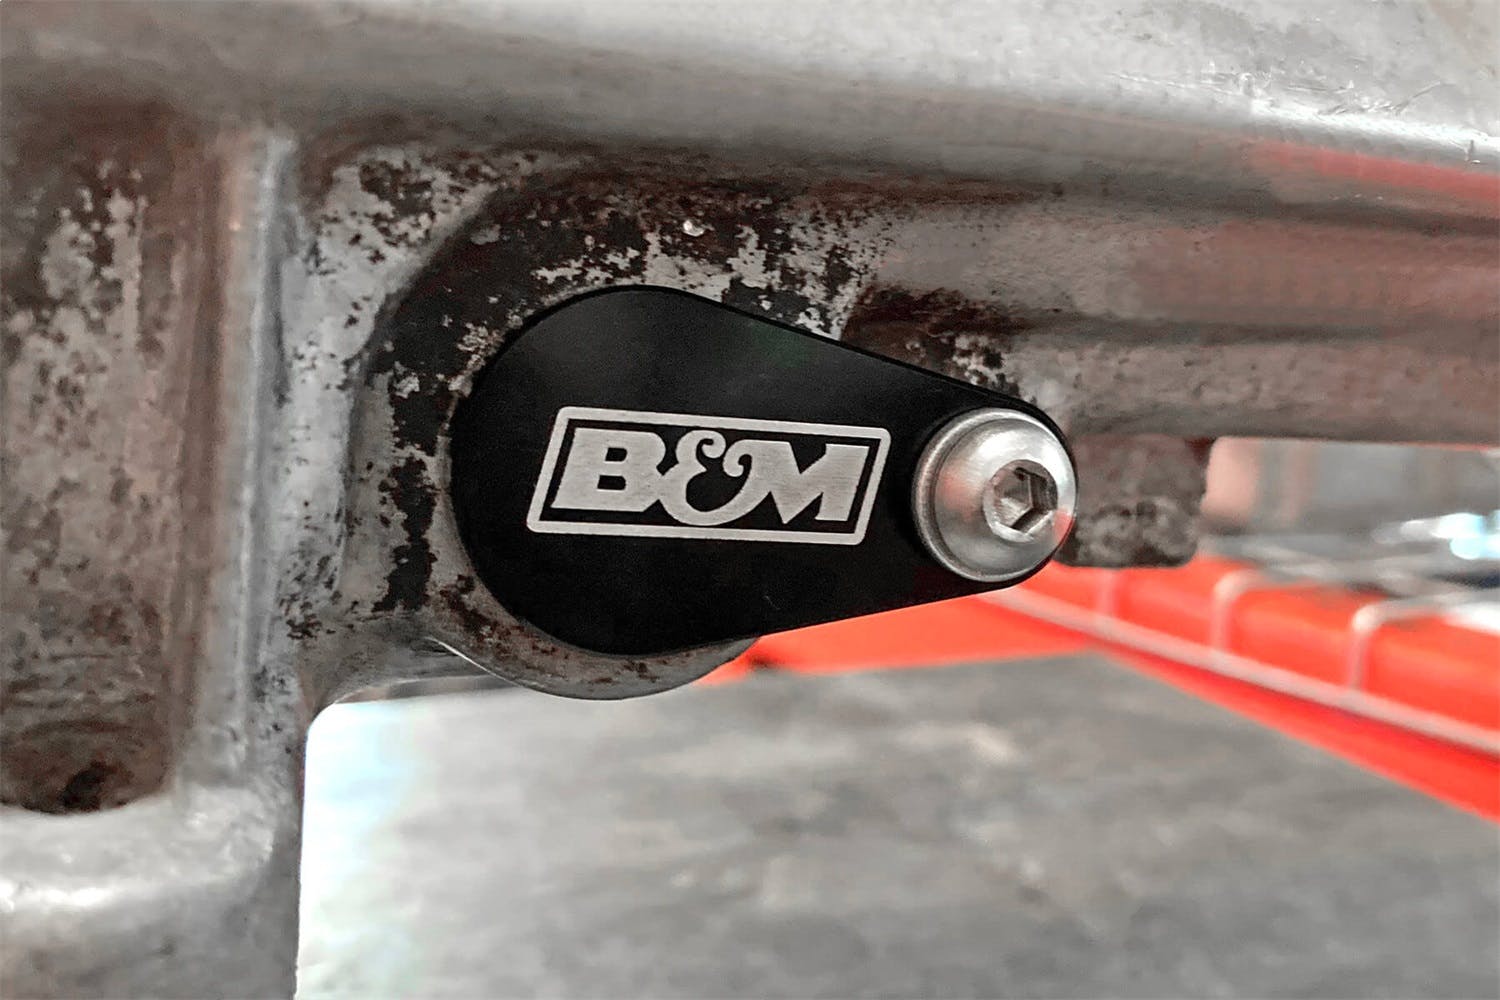 B&M 20299 Transmission Speedo Port Plug, GM TH350